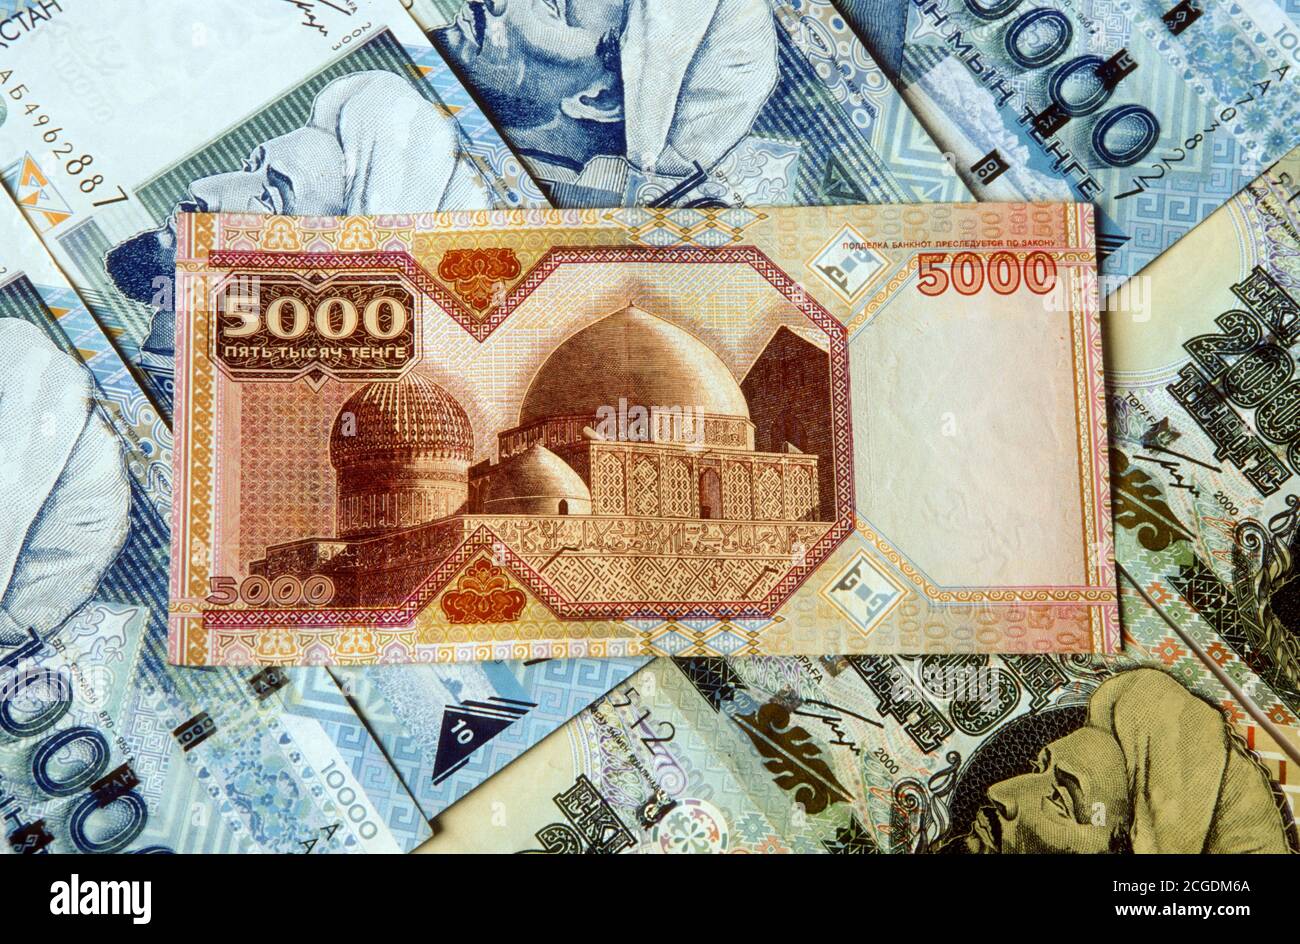 Tenge - money of Kazakhstan Stock Photo